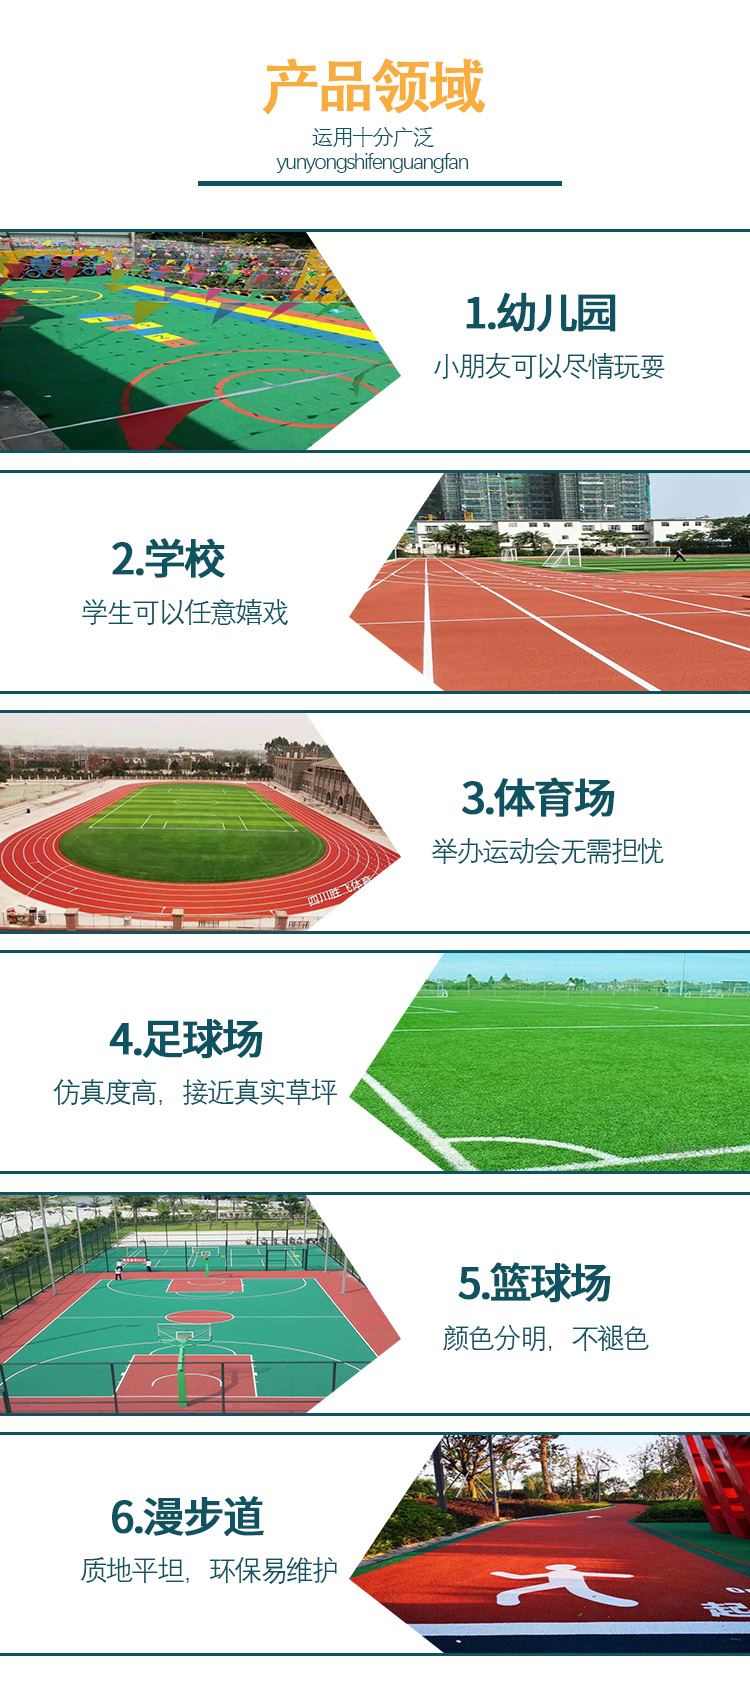 Community plastic road, running track, children's playground, plastic safety mat, EPDM rubber runway, Shengfei